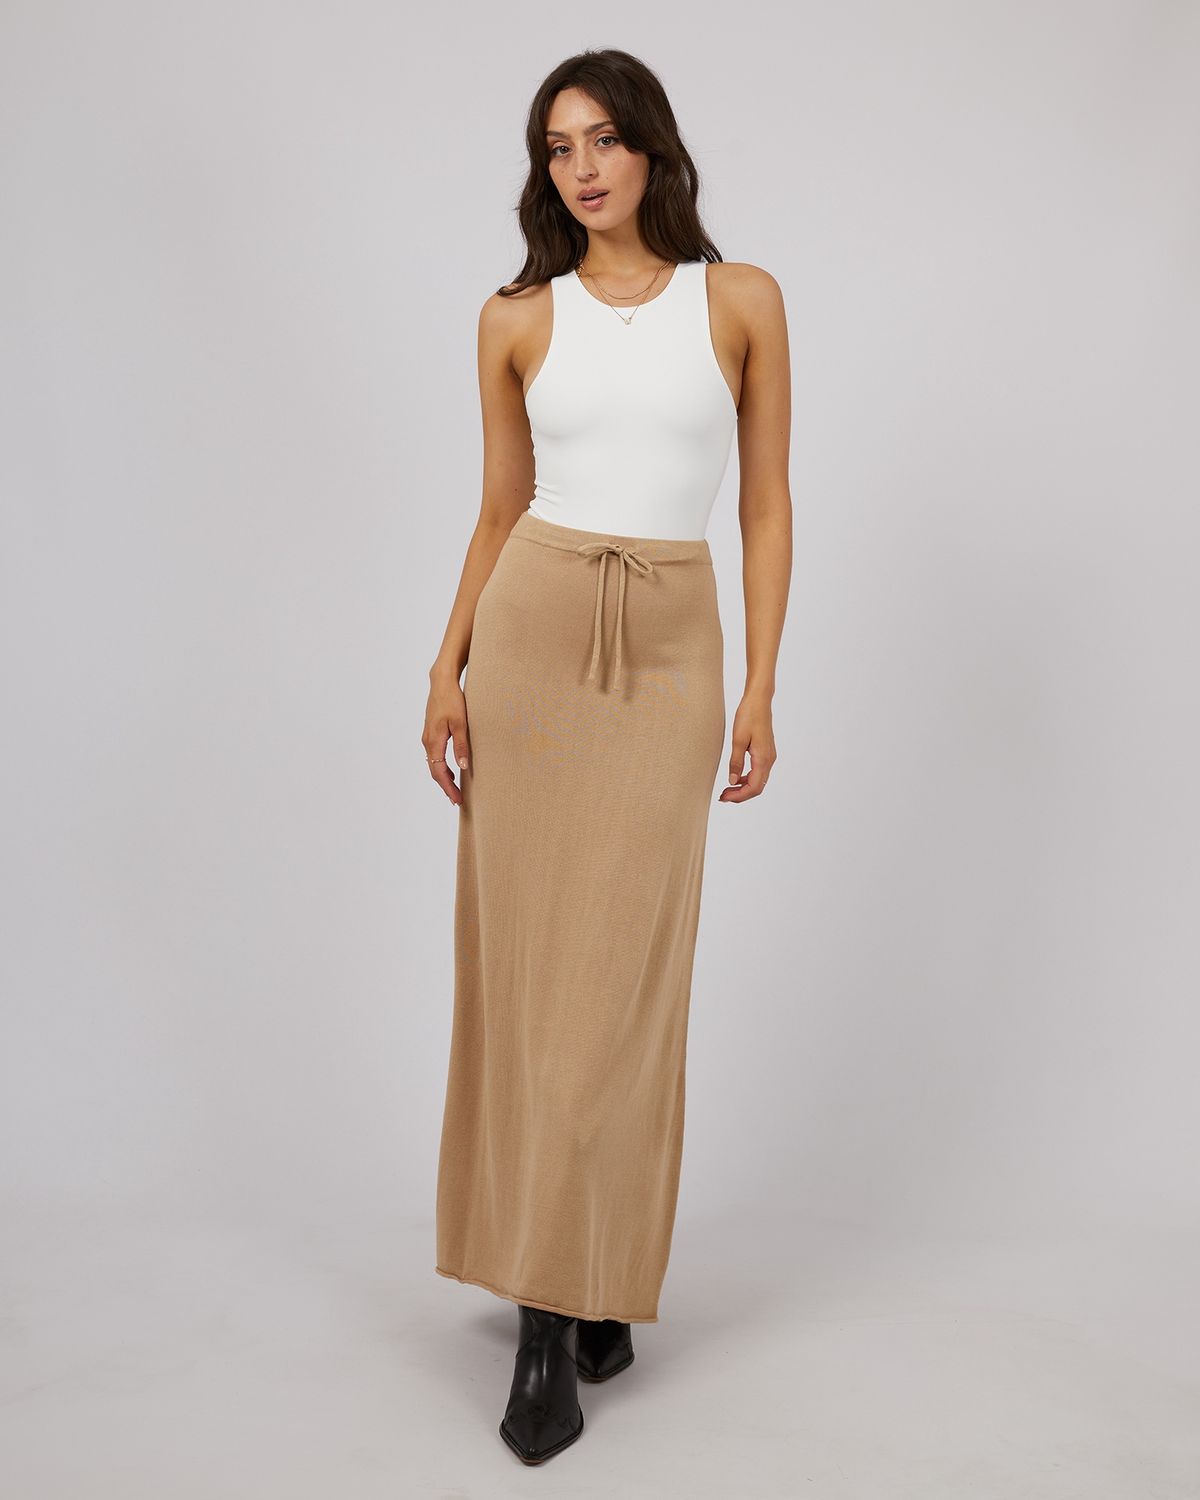 Eve Knit Skirt, Size: 8, Colour: Beige